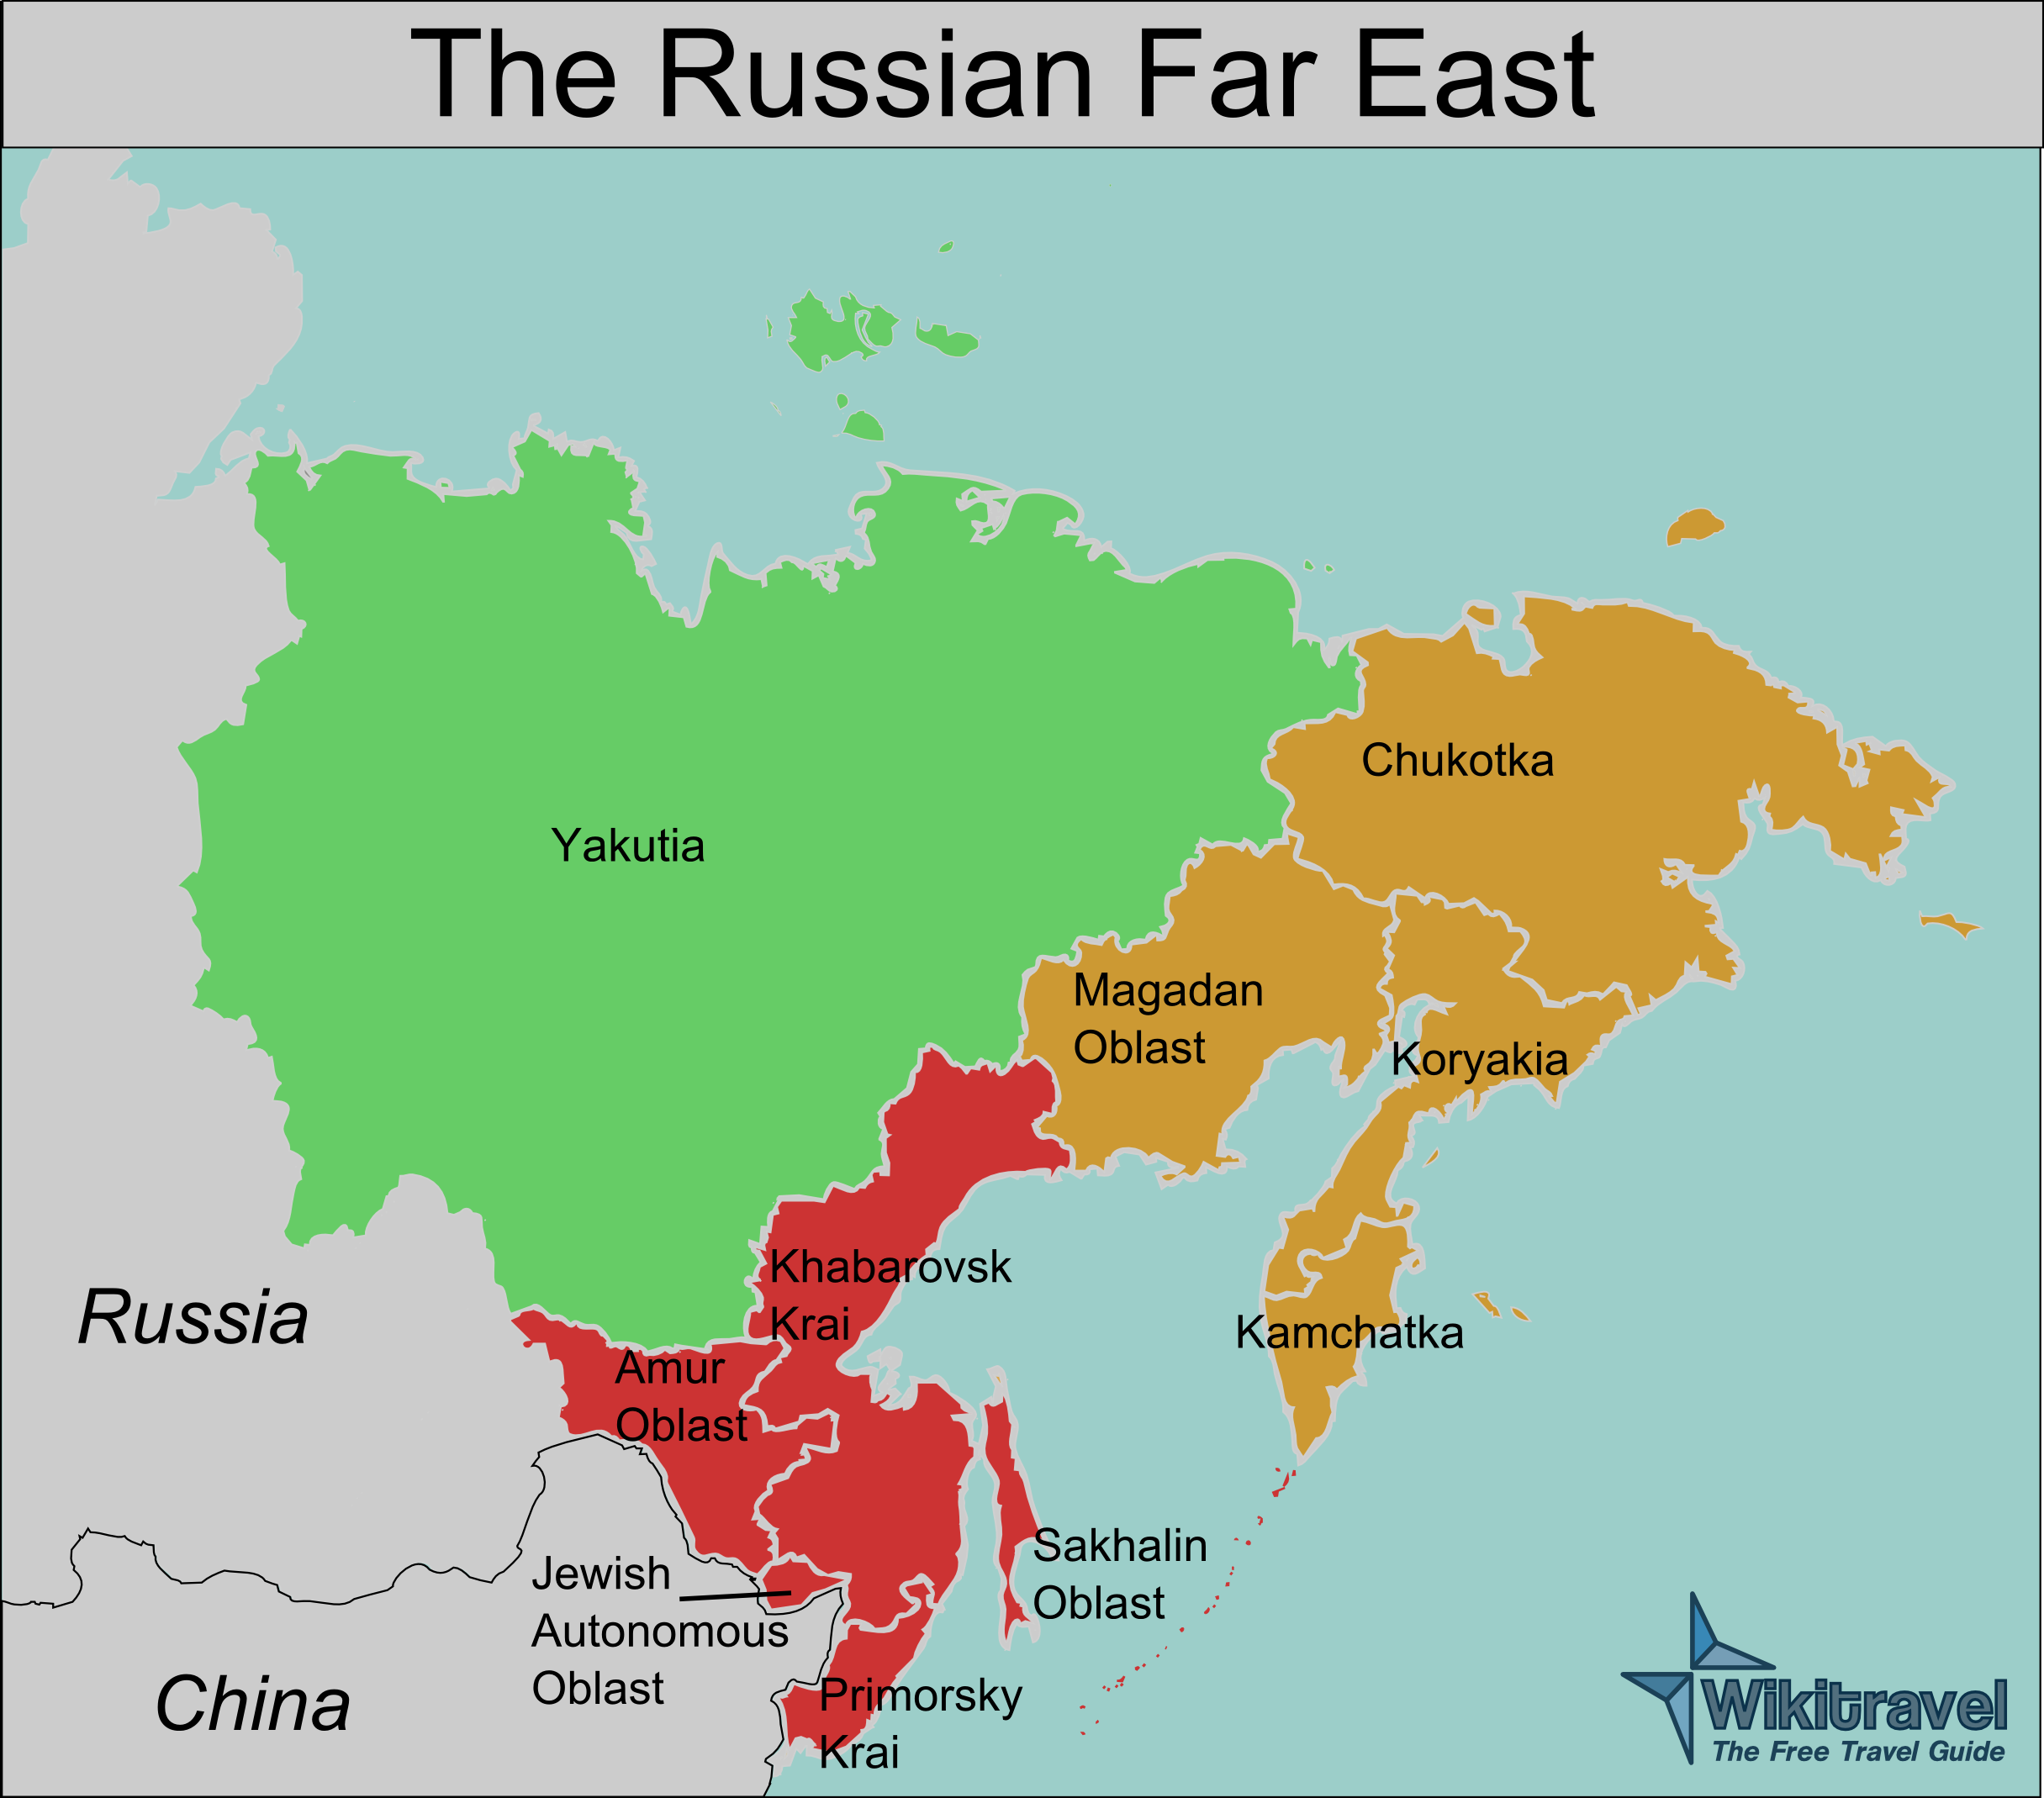 Location of the Jewish Autonomous region in the Russian Far East.